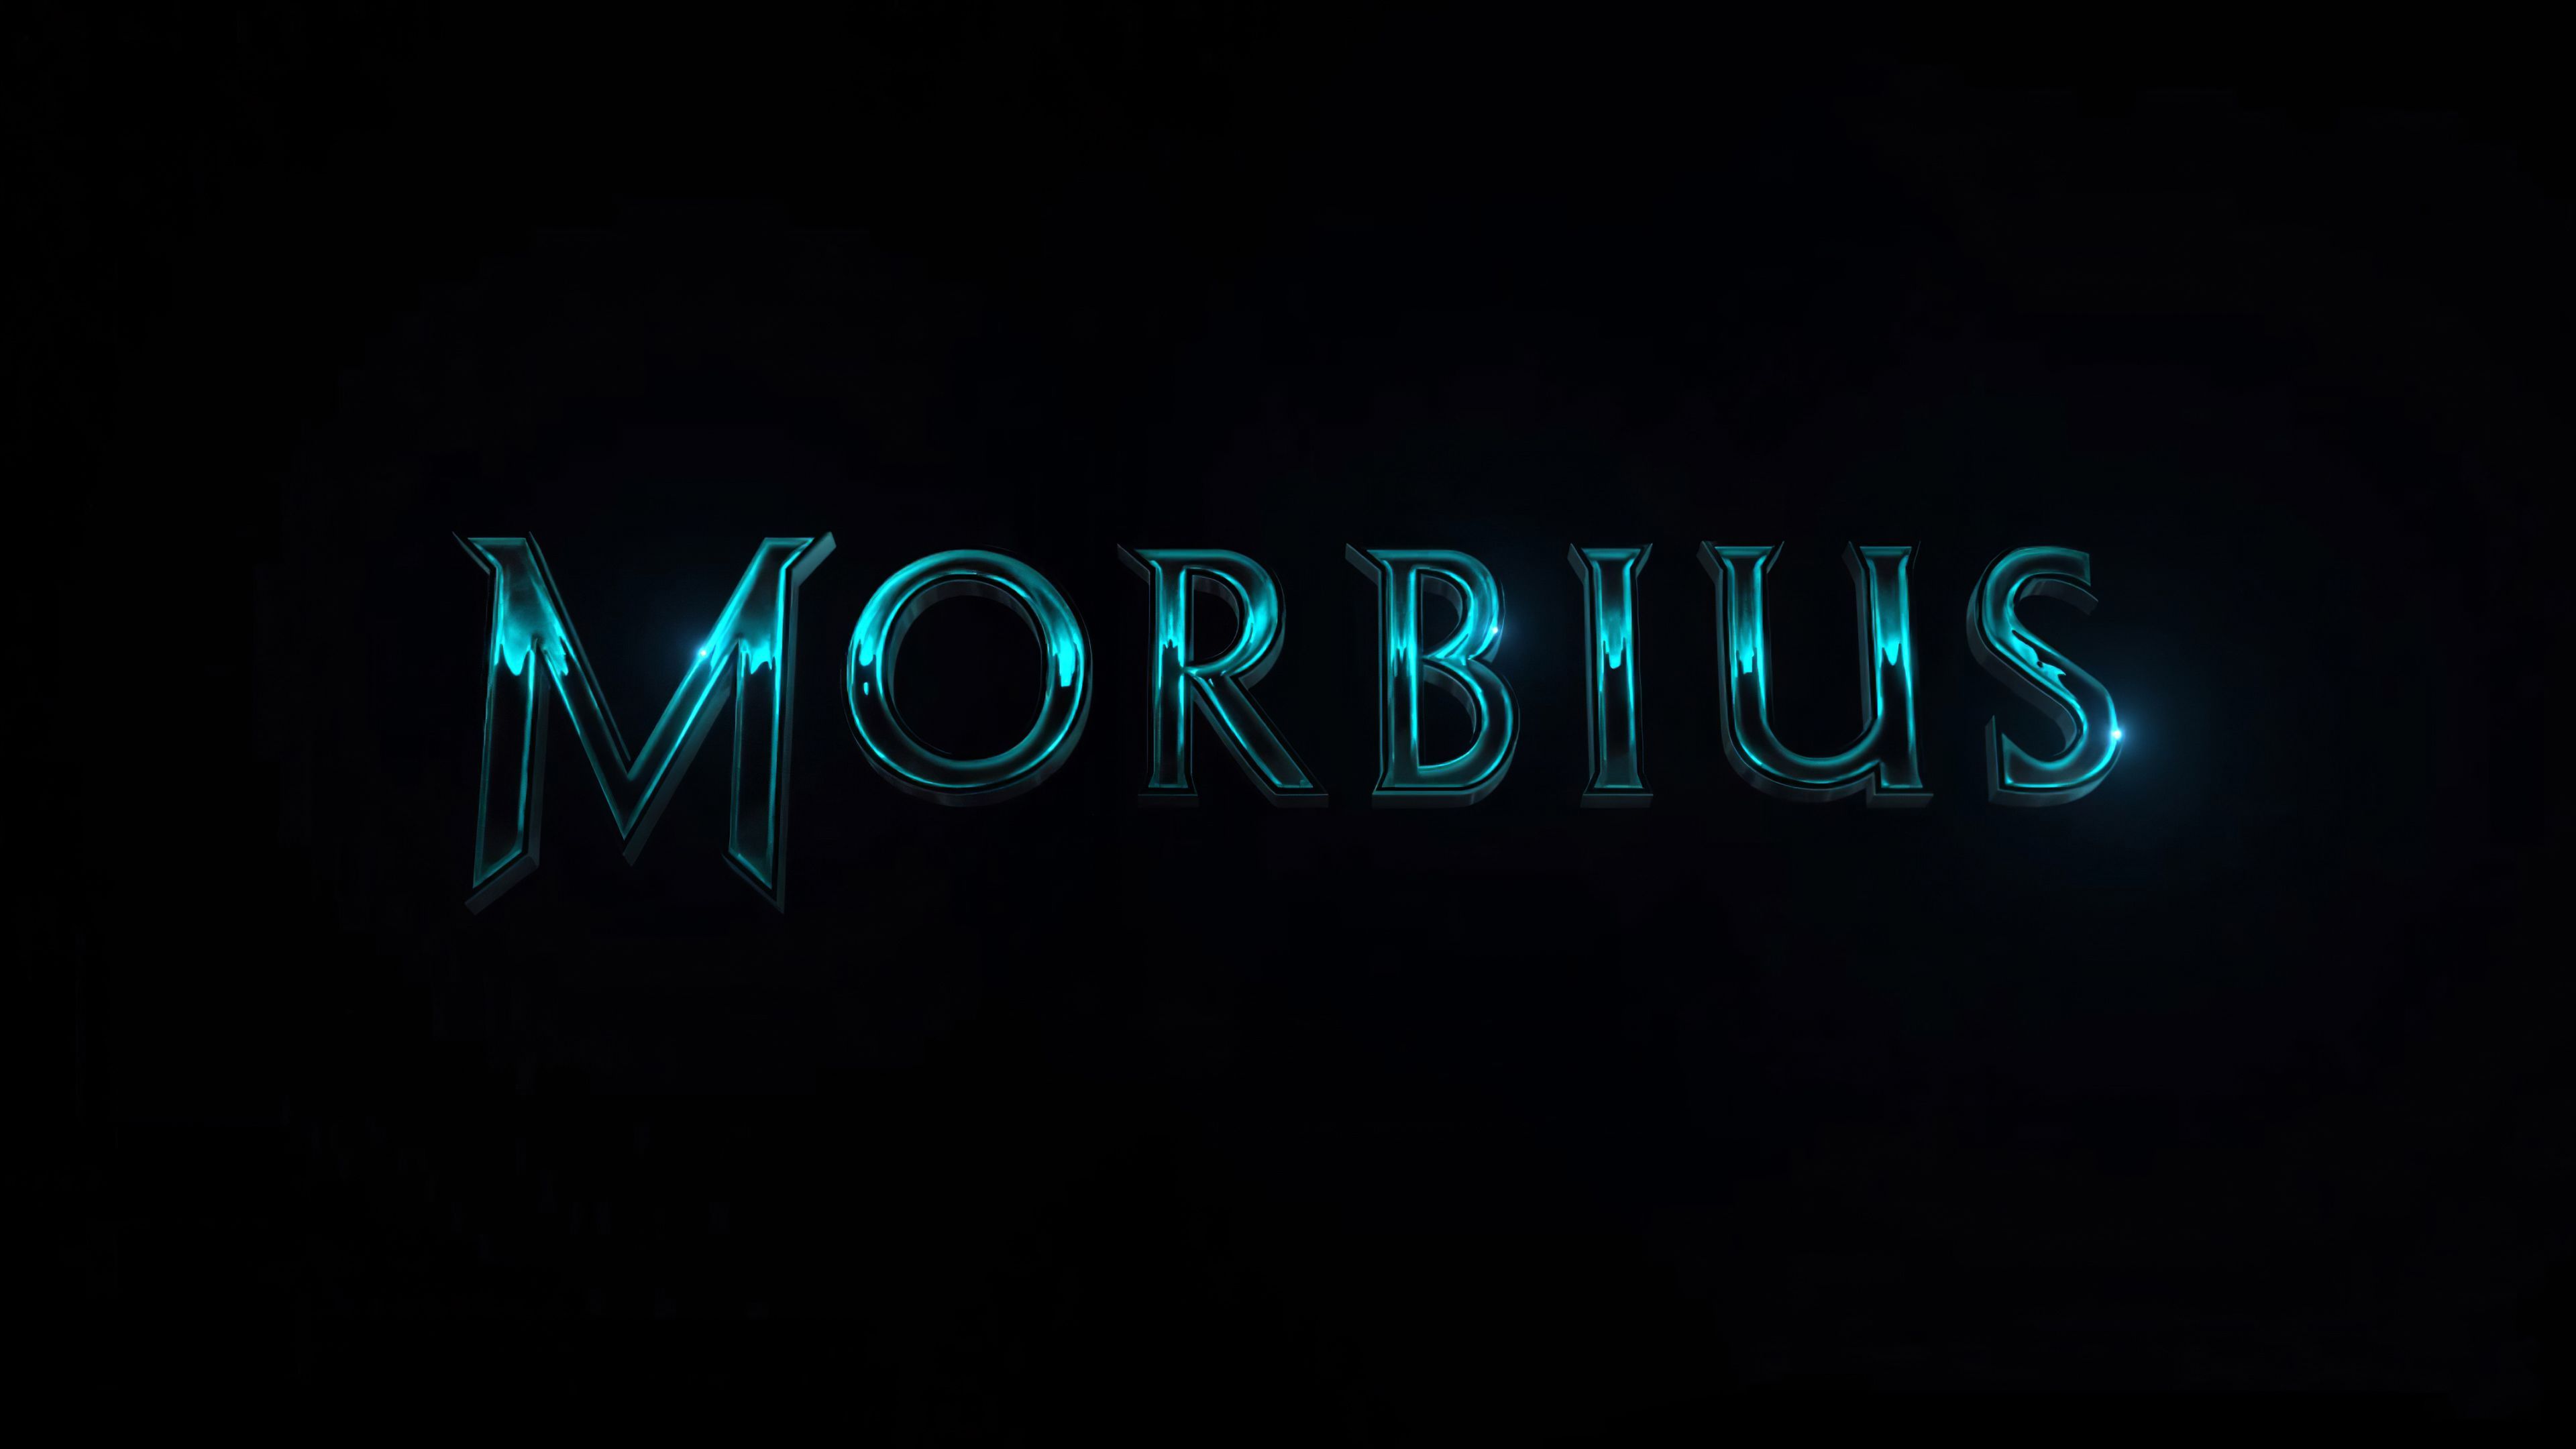 Morbius 2020 Logo Morbius 2020 Logo wallpaper 4k, Morbius 2020 Logo 4k. Screenplay writer, Sony movies, Marvel entertainment